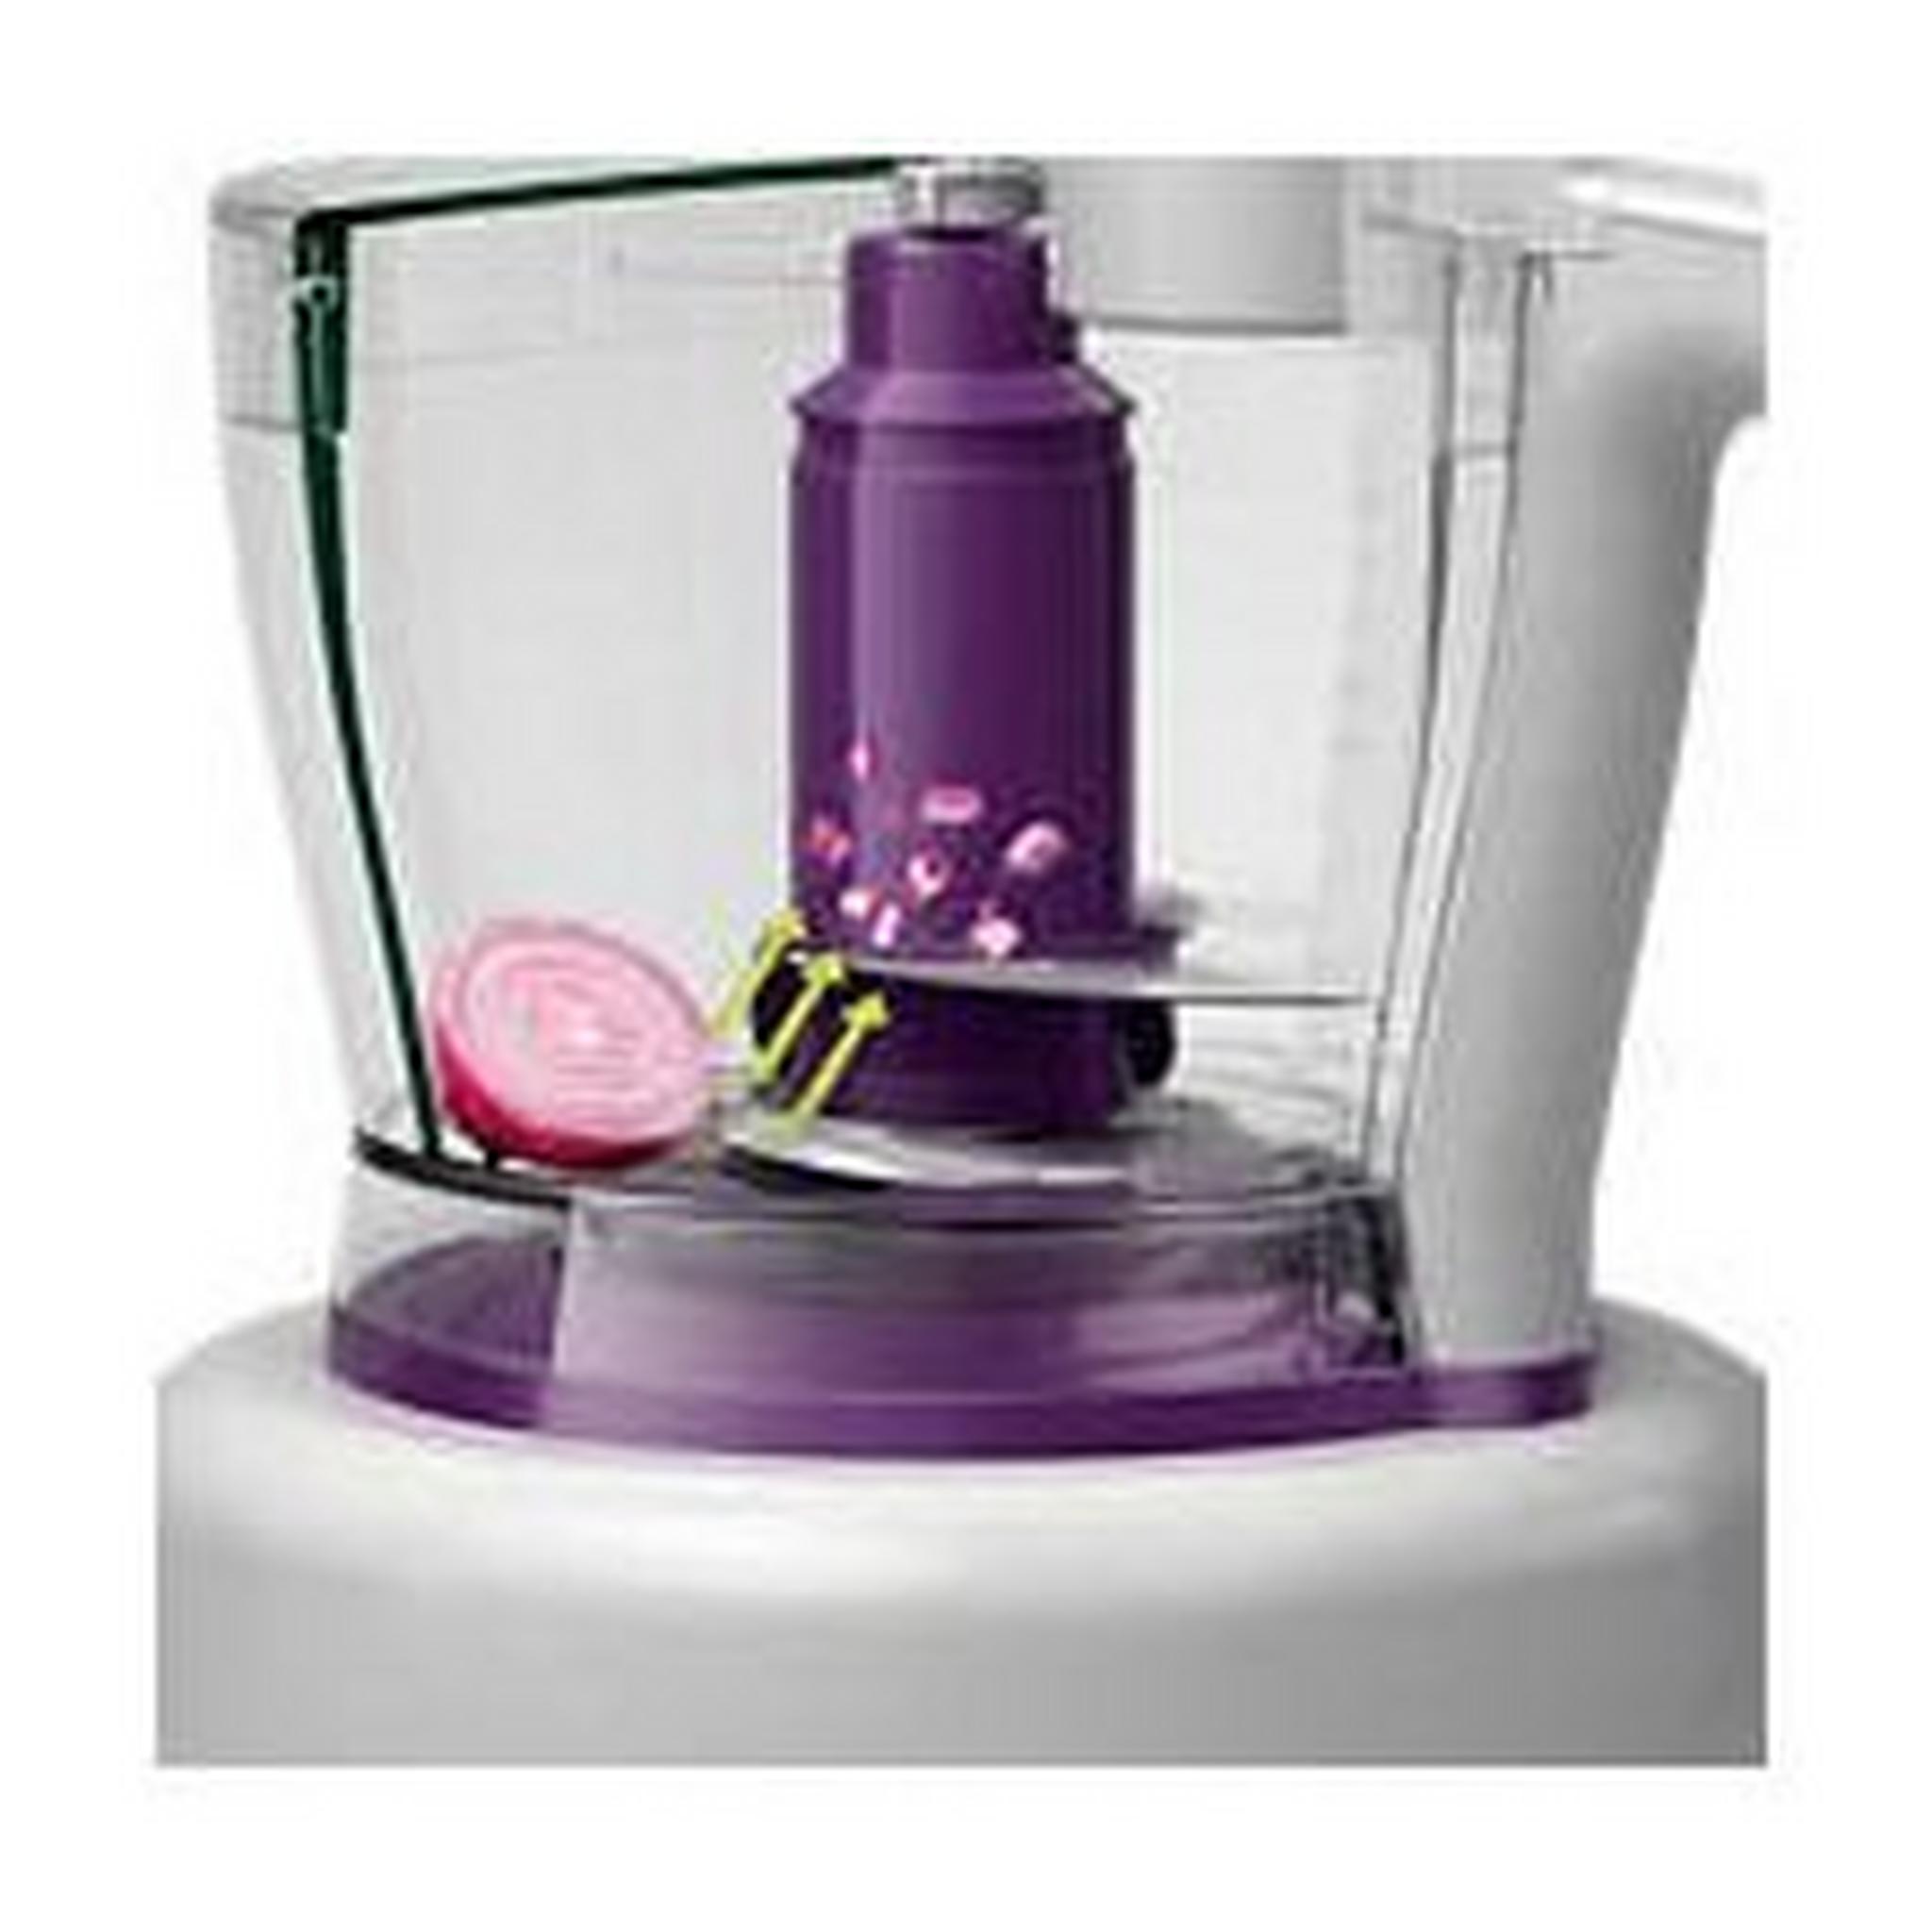 Philips 5-IN-1 1000W 3.4L Viva Collection Food Processor (HR7757/01) – Purple / White